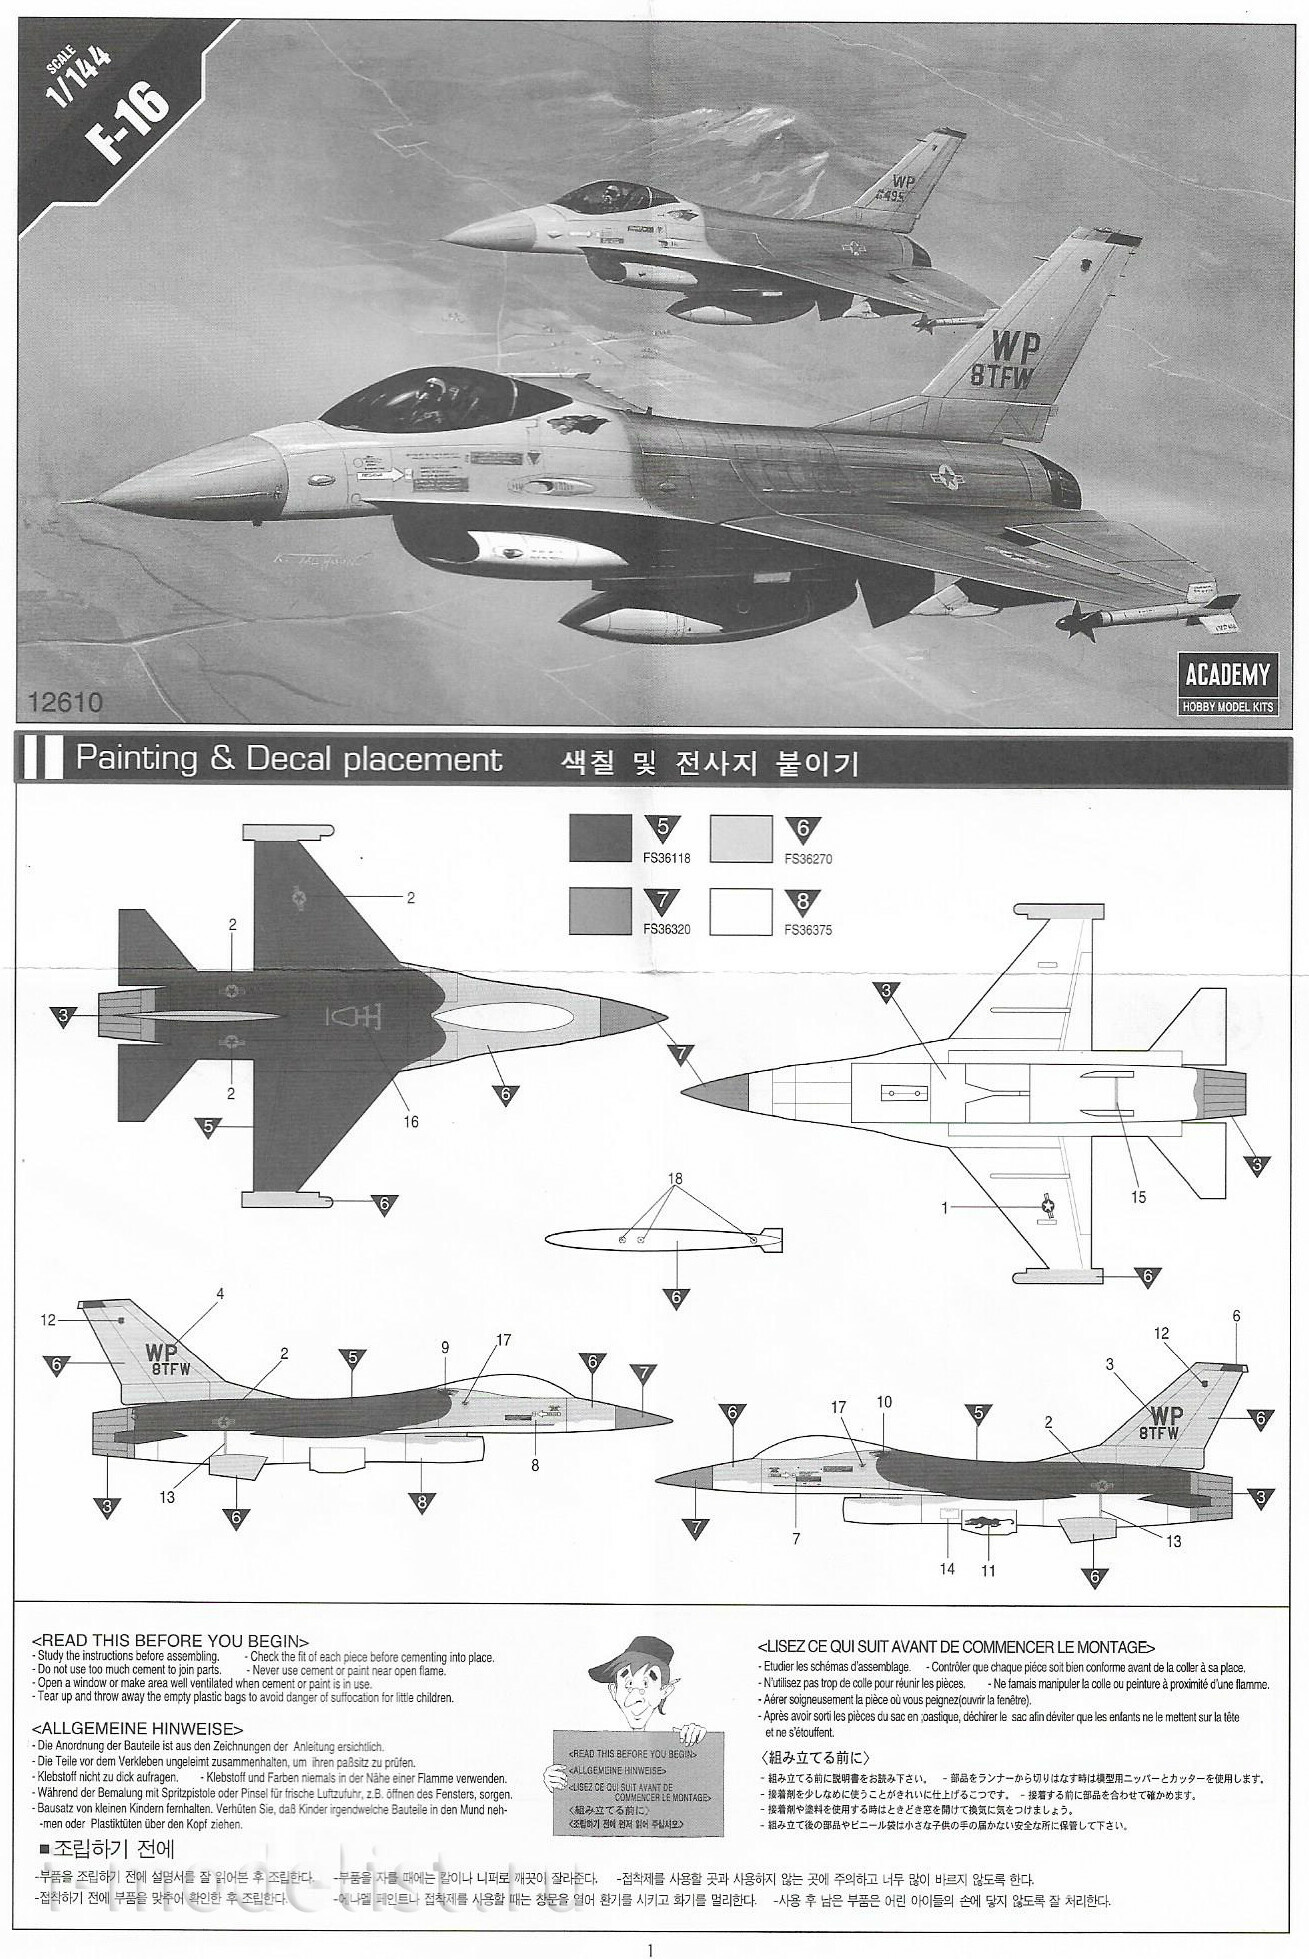 12610 Academy 1/144 F-16 Fighting Falcon